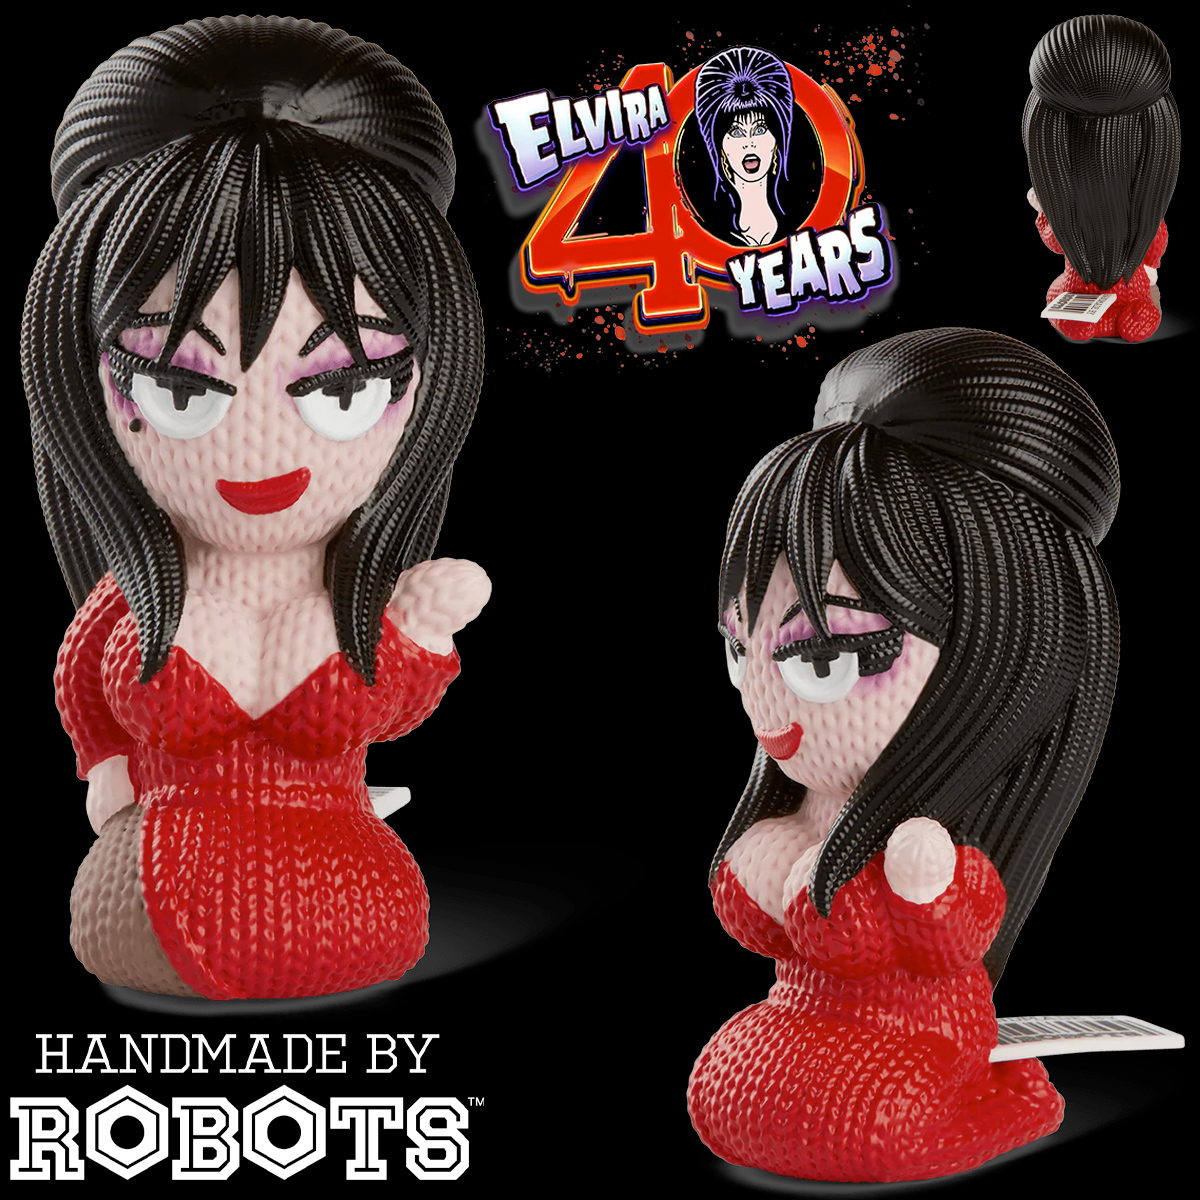 Elvira, a Rainha das Trevas Handmade By Robots - Boneca de Vinil no Estilo Crochê Amigurumi